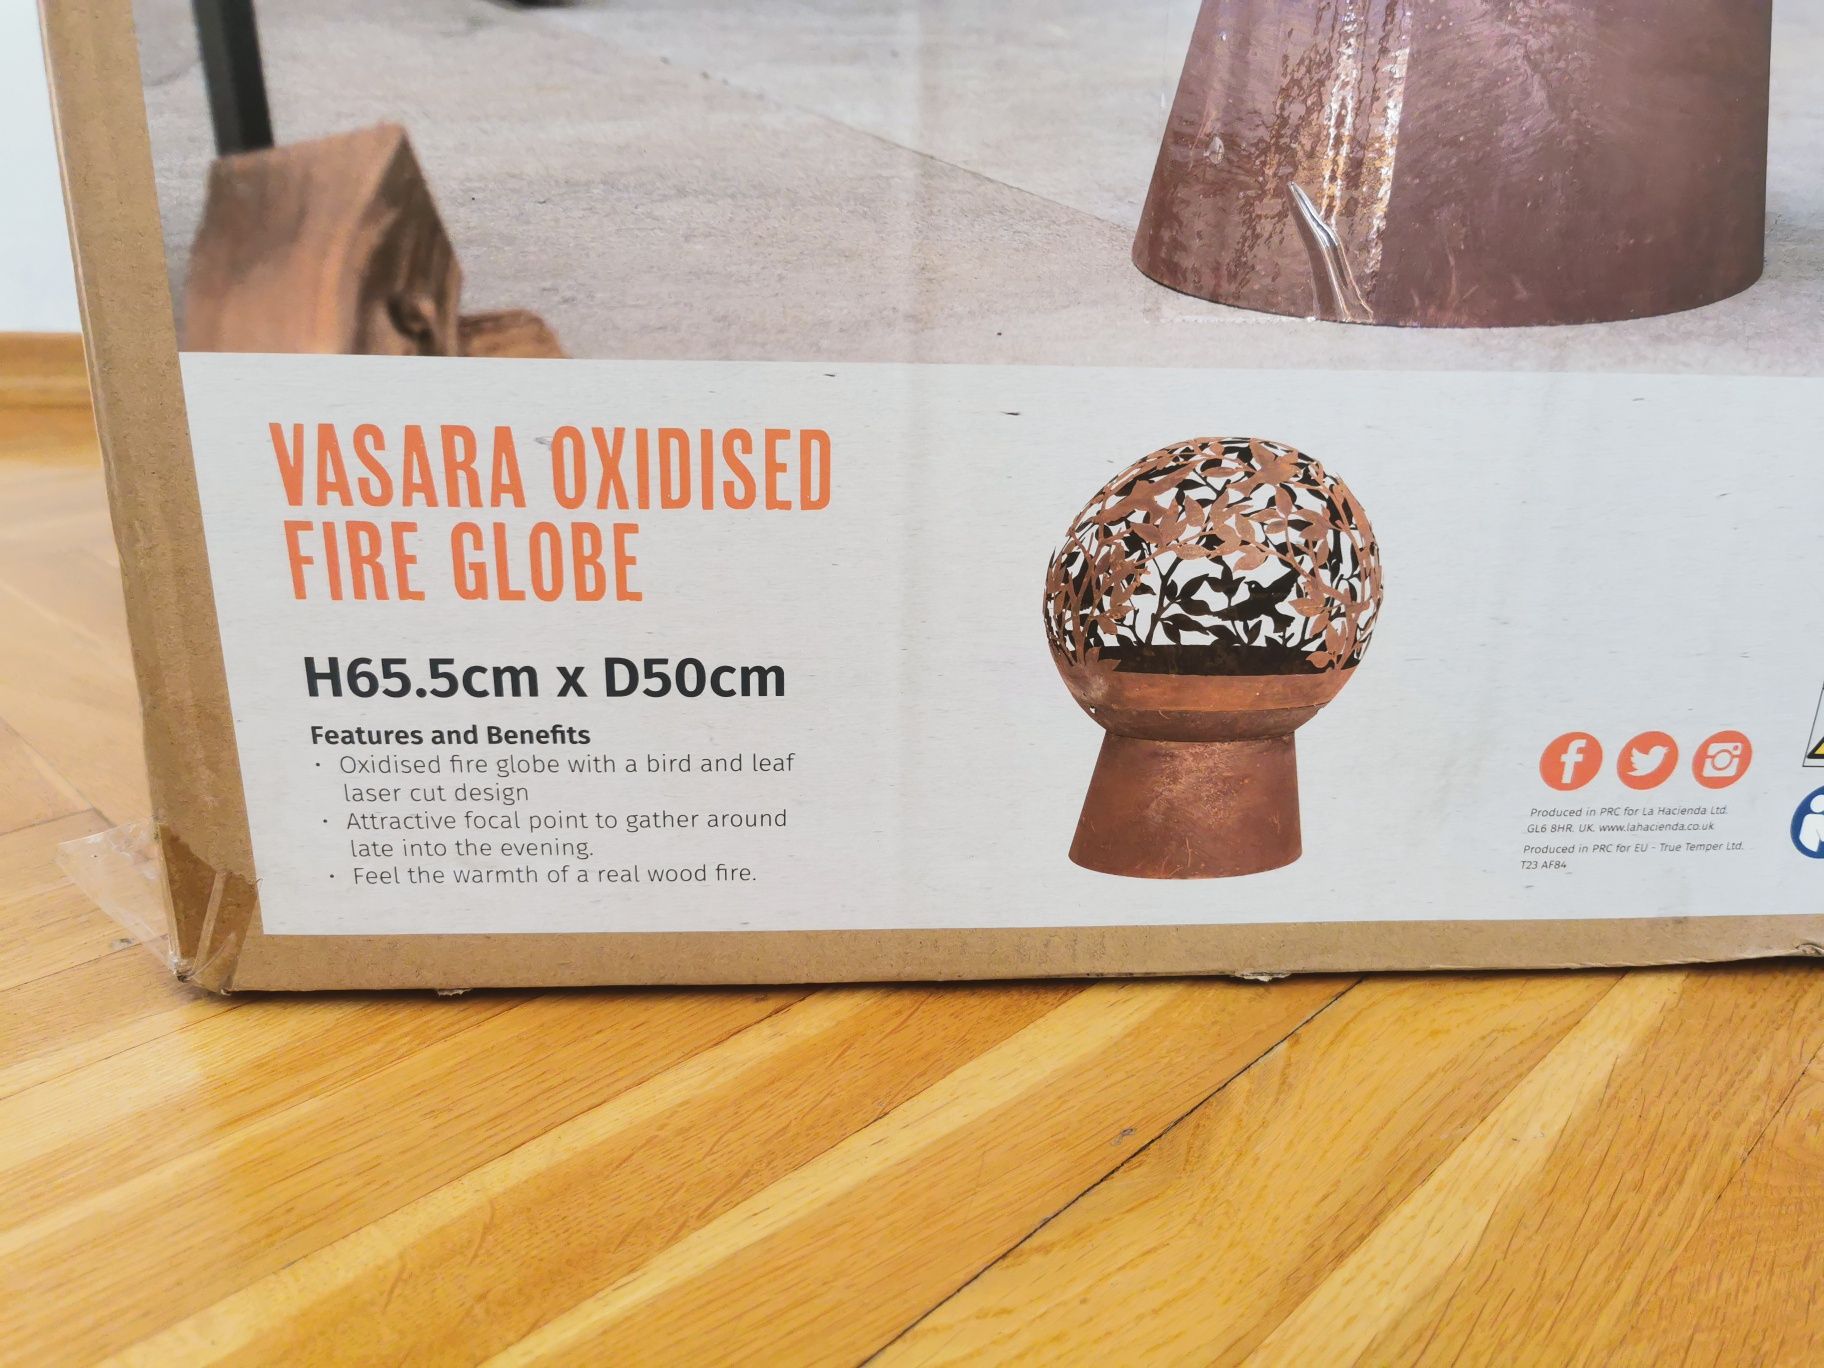 Kula paleniskowa Vasara Oxidised fire globe